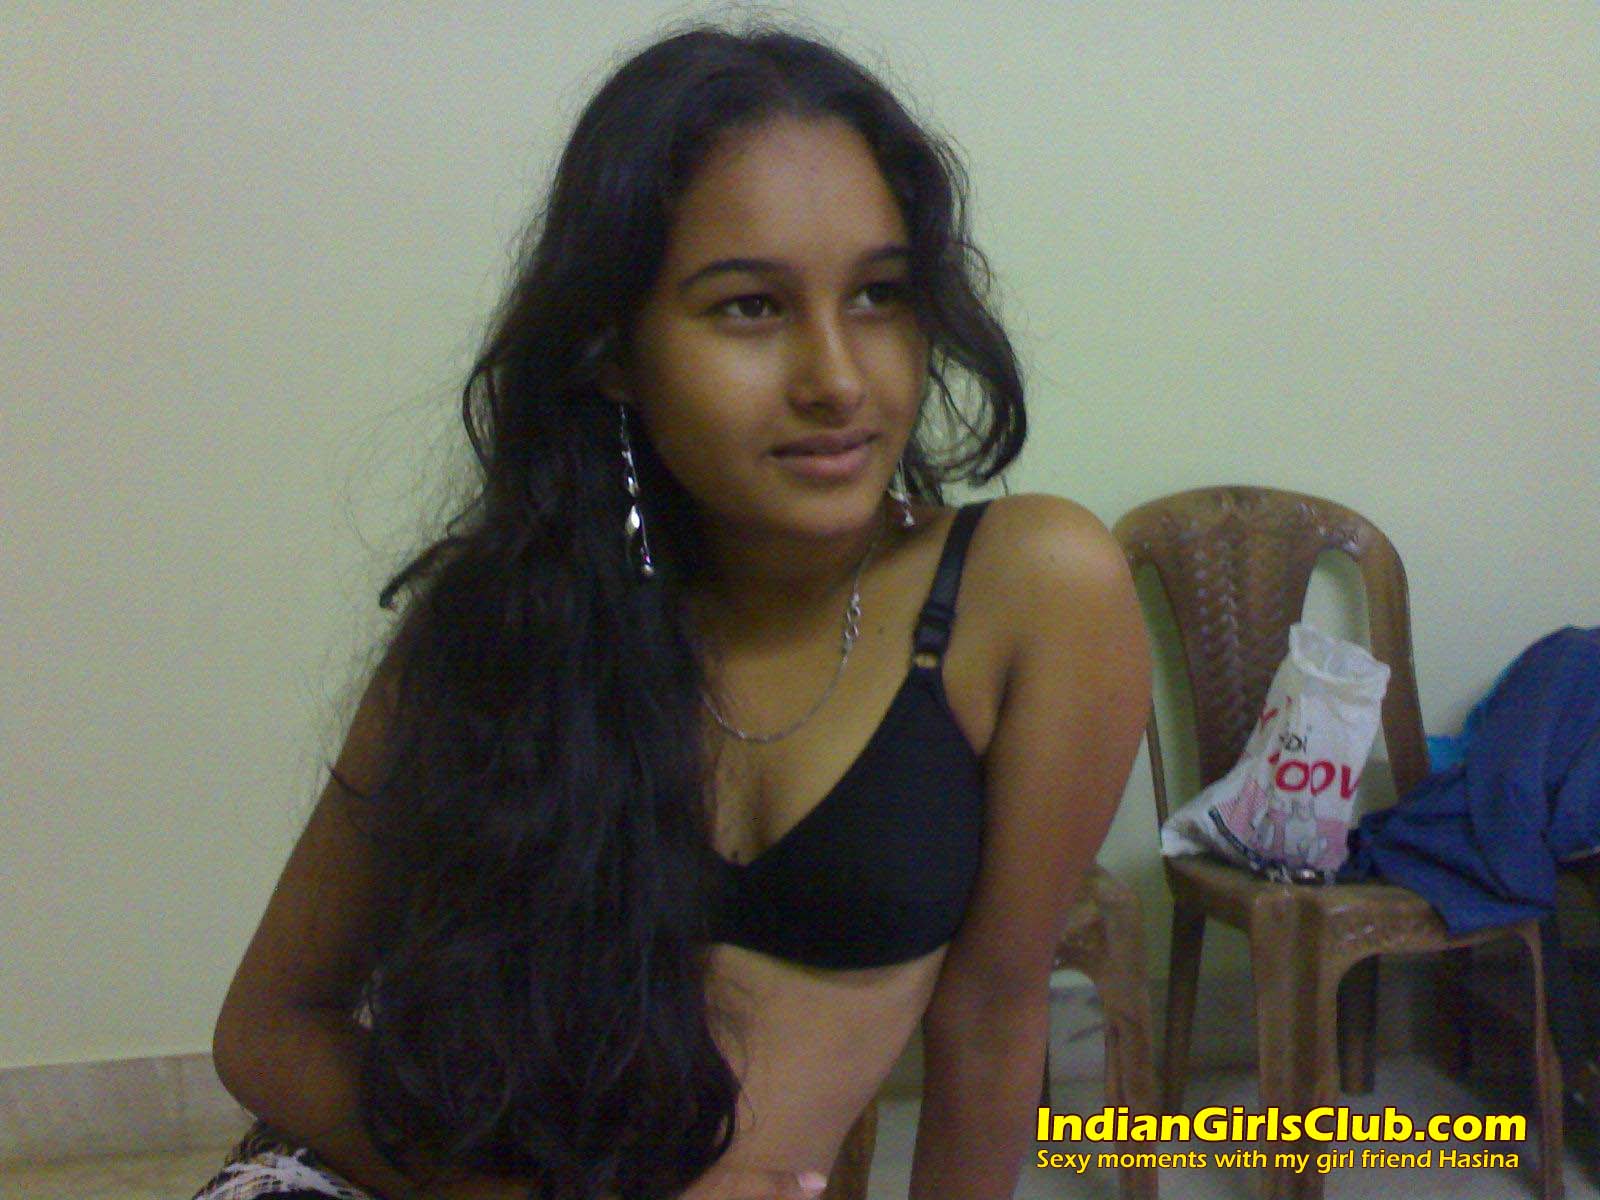 2 indian girlfriends pics - Indian Girls Club